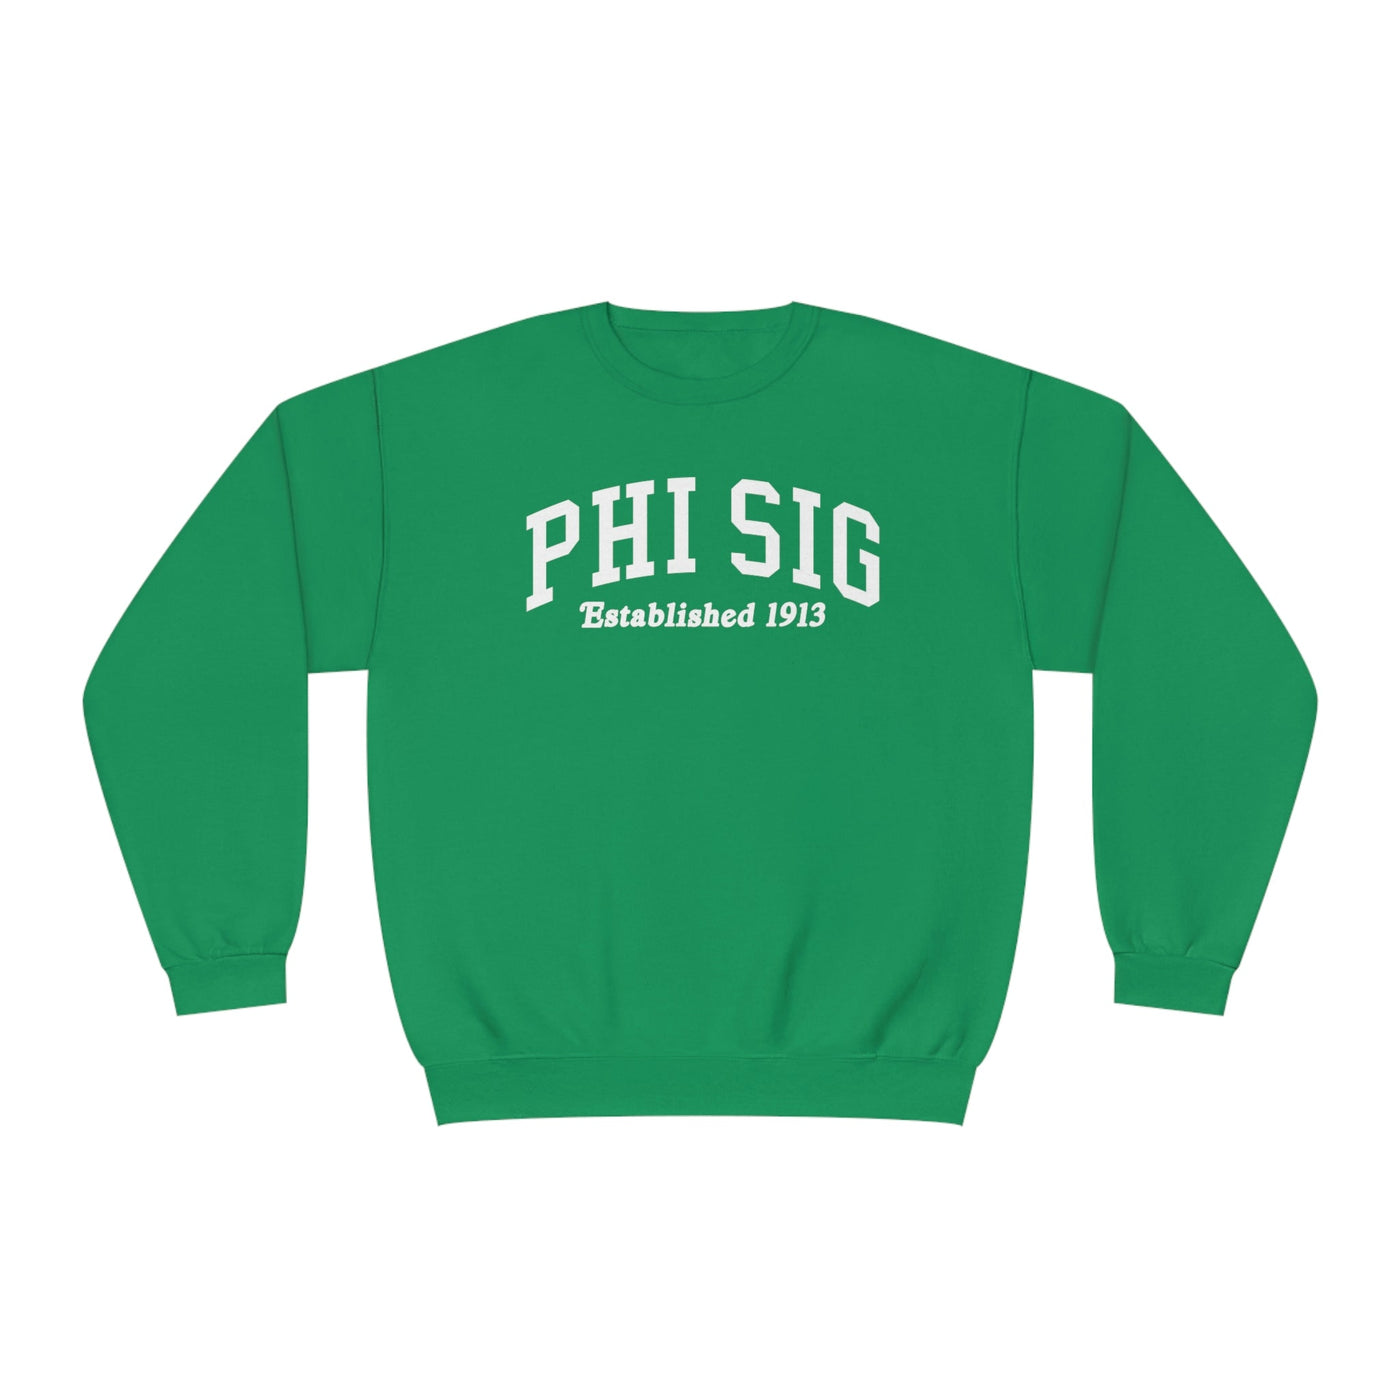 Phi Sigma Sigma Sorority Varsity College Phi Sig Crewneck Sweatshirt